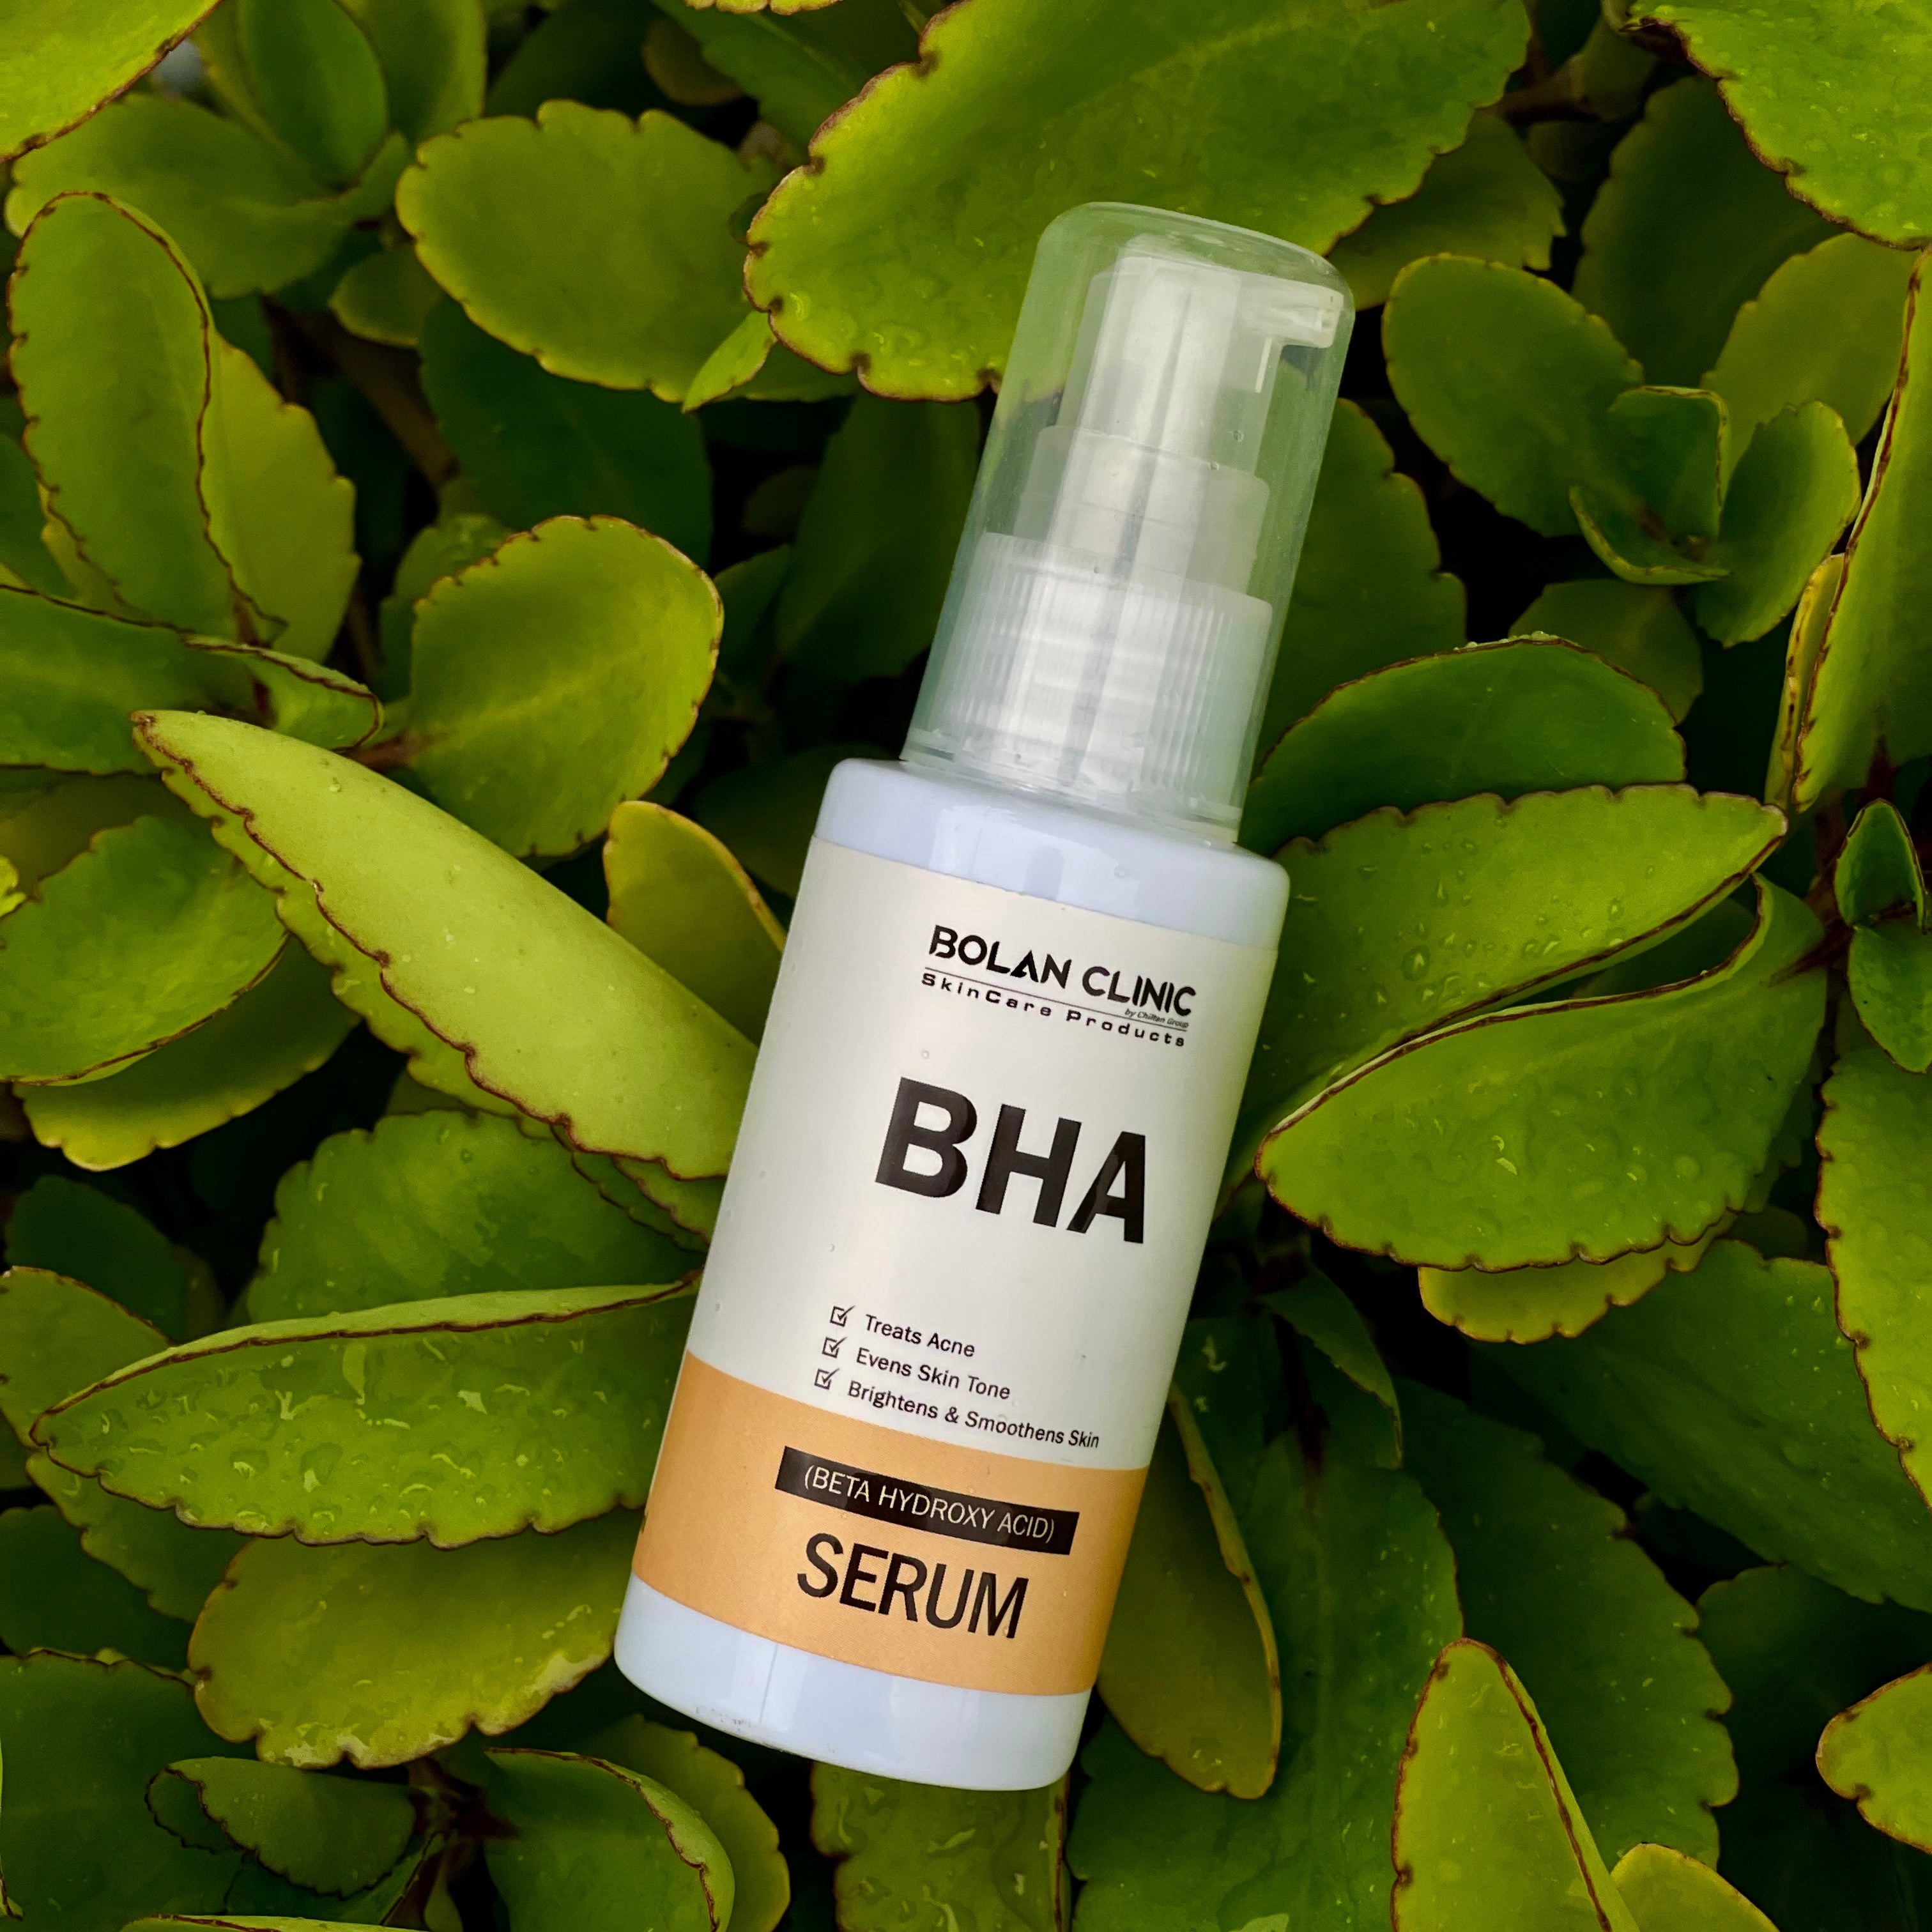 BHA (Beta Hydroxy Acid) Serum - Treats Acne, Evens Skin Tone, Brightens & Smoothens Skin!